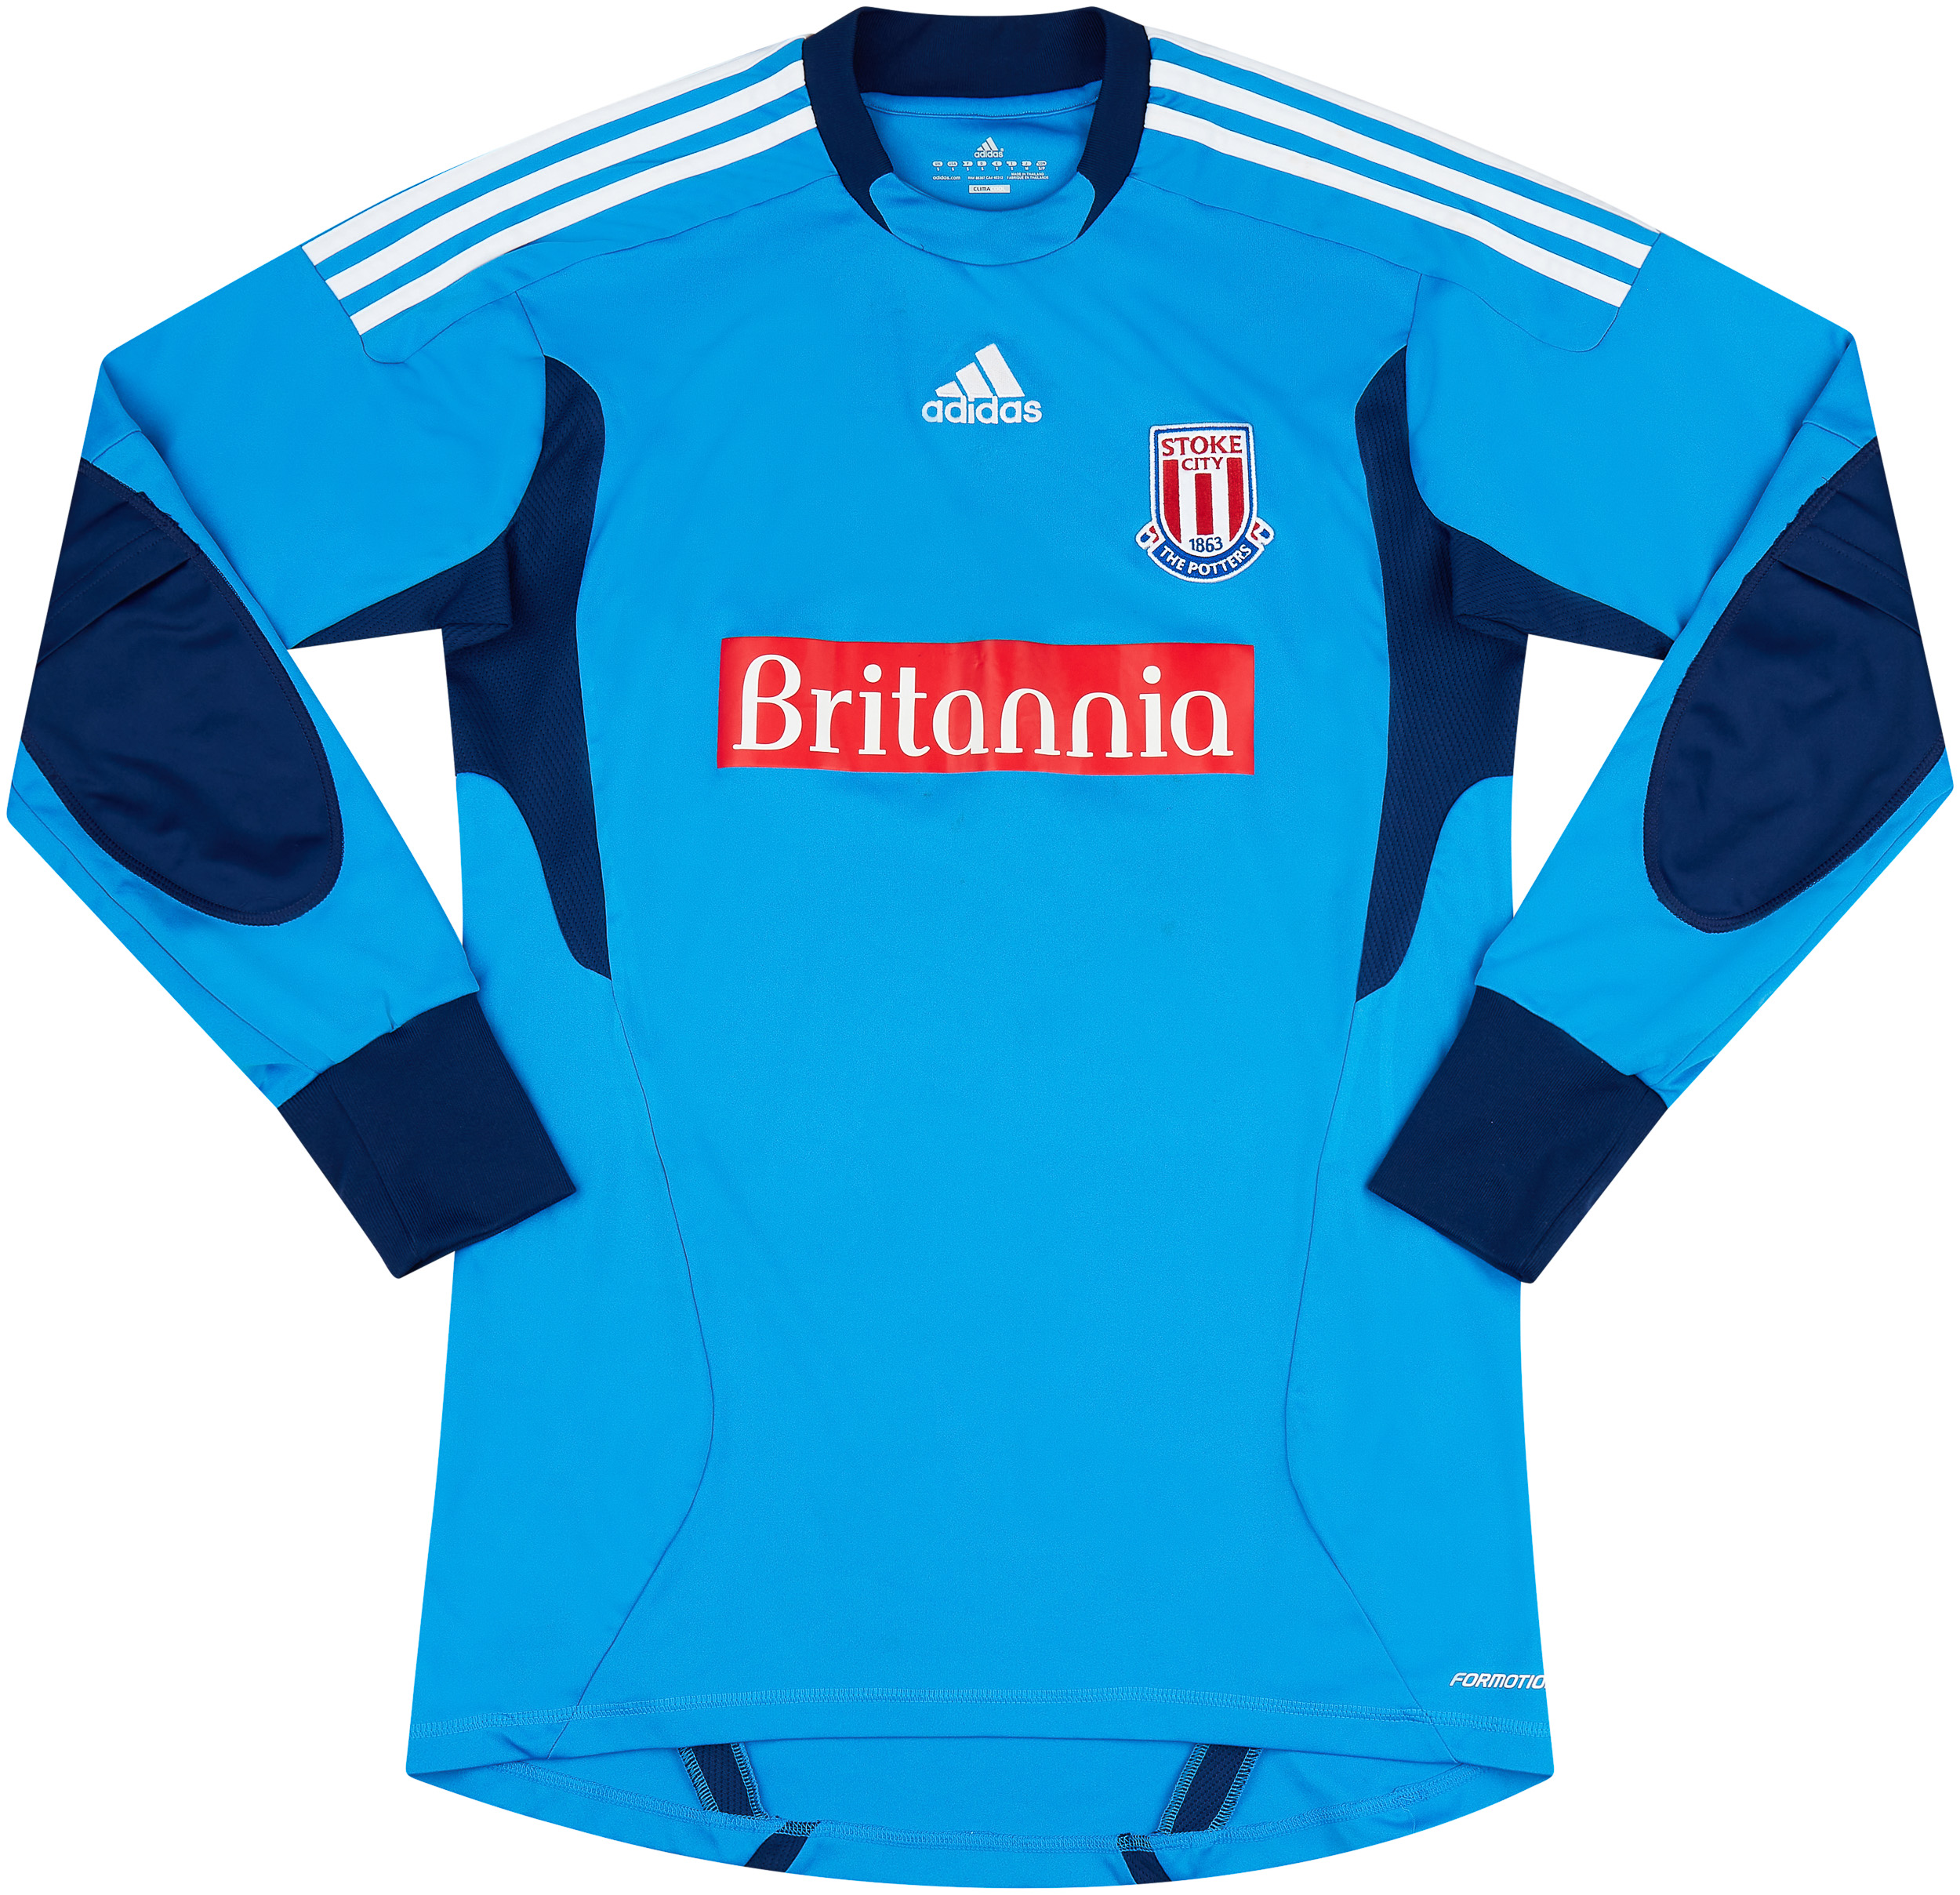 Stoke City  Goalkeeper shirt (Original)